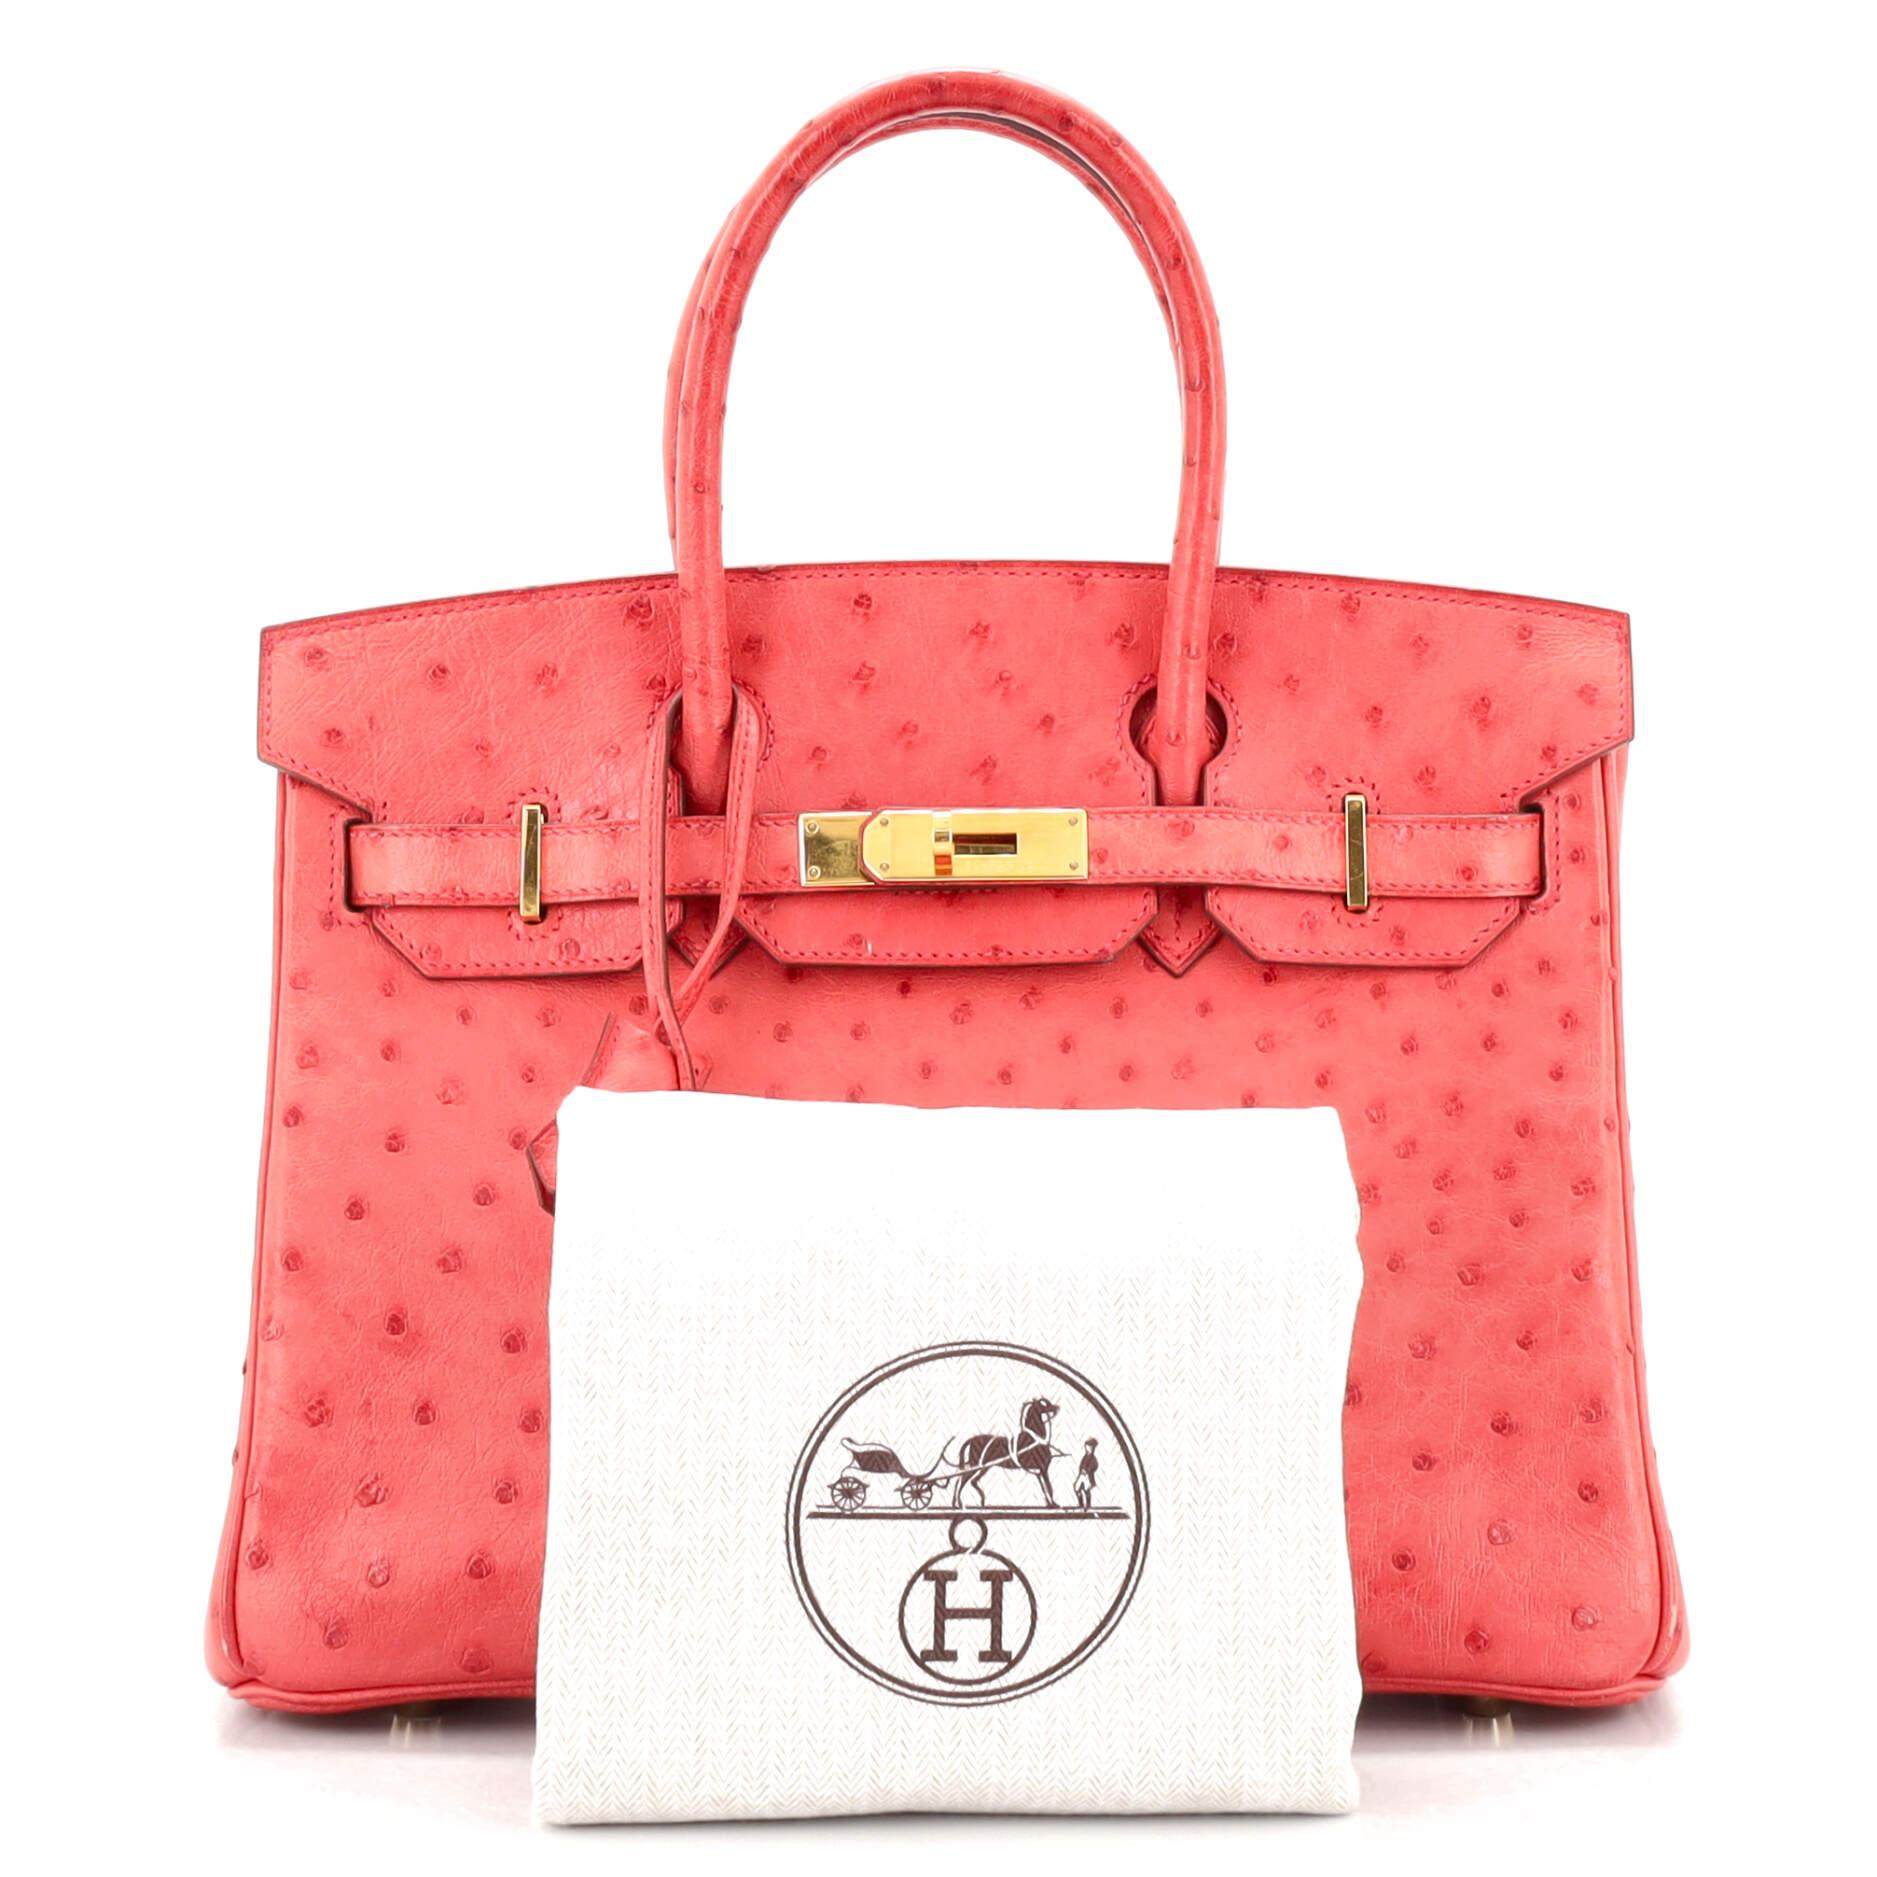 Hermes Birkin Pink Ostrich Leather - 4 For Sale on 1stDibs